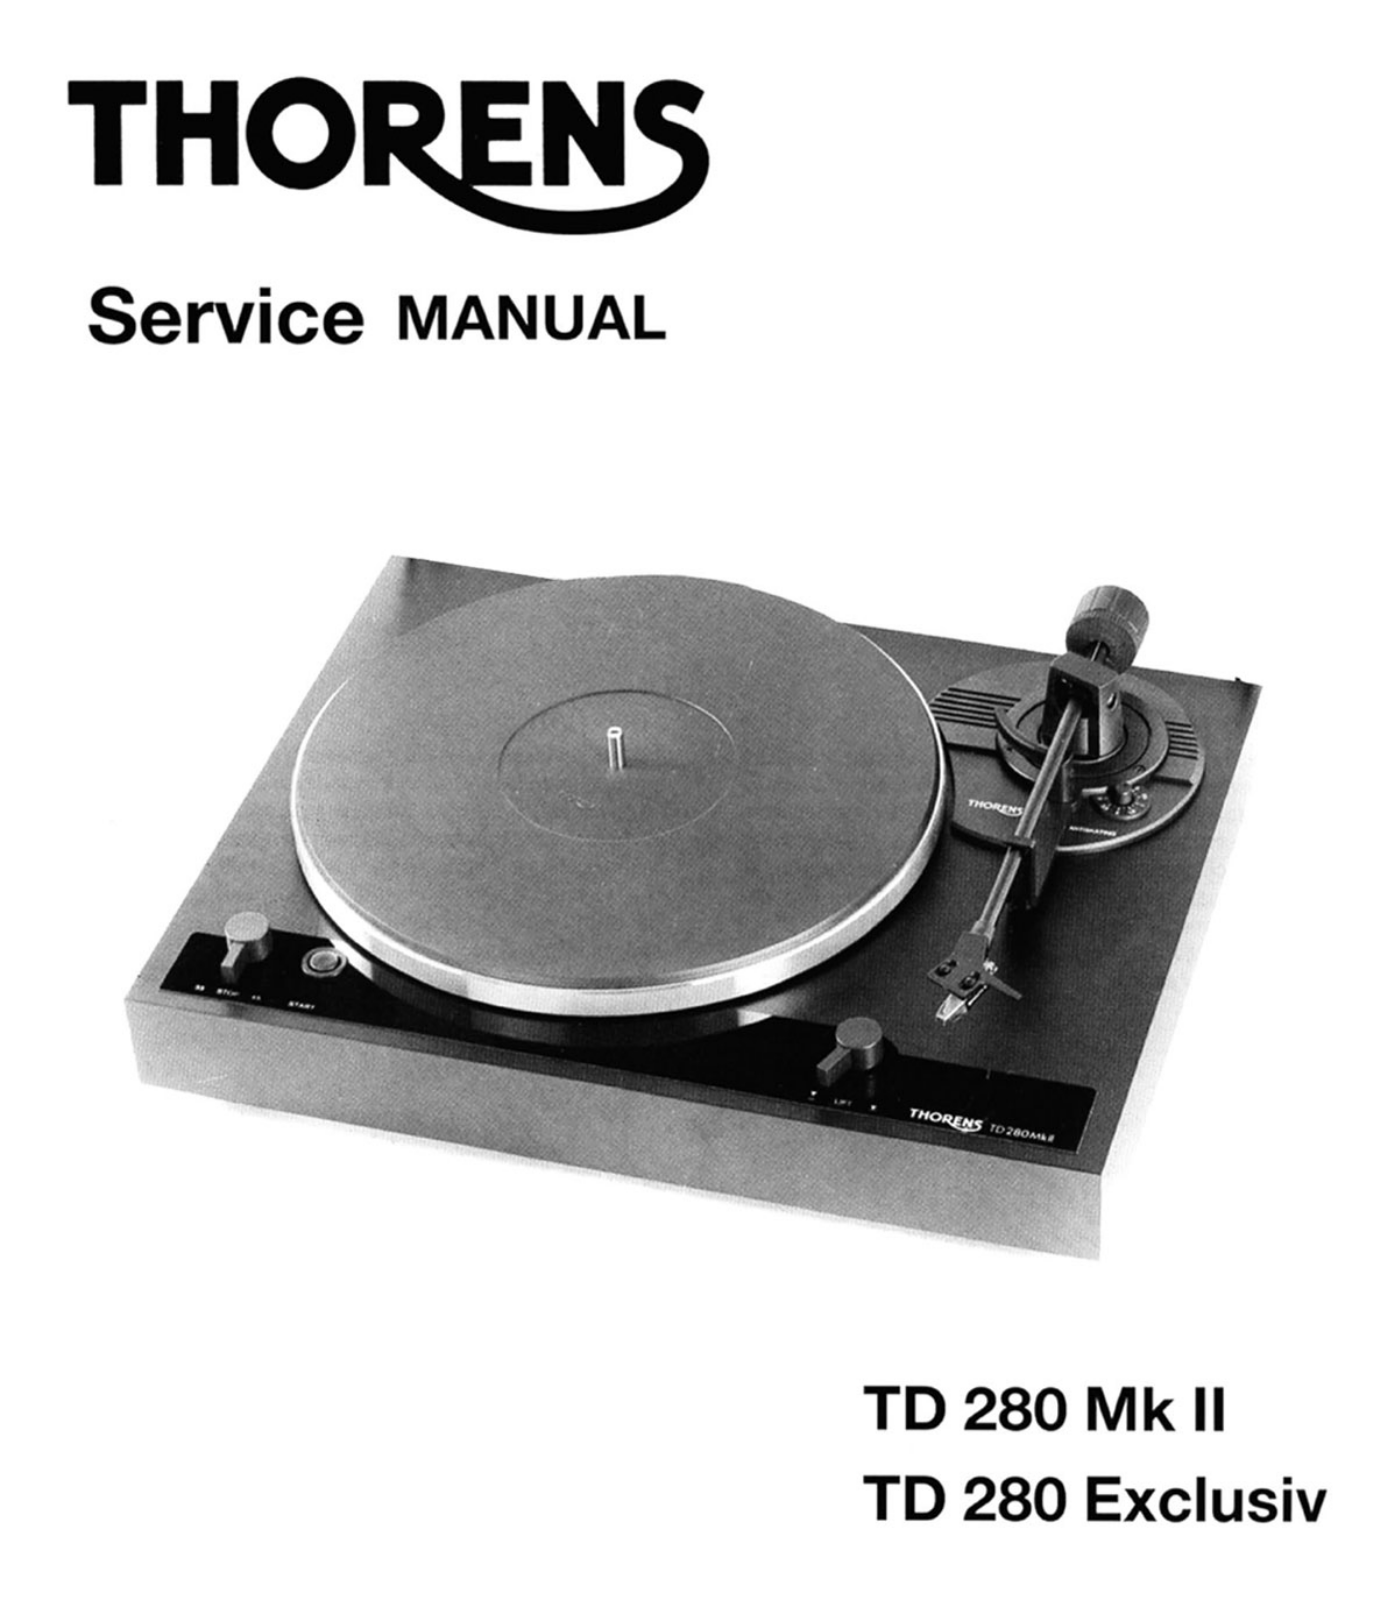 Thorens TD-280 Exclusiv, TD-280 Exclusive Service manual